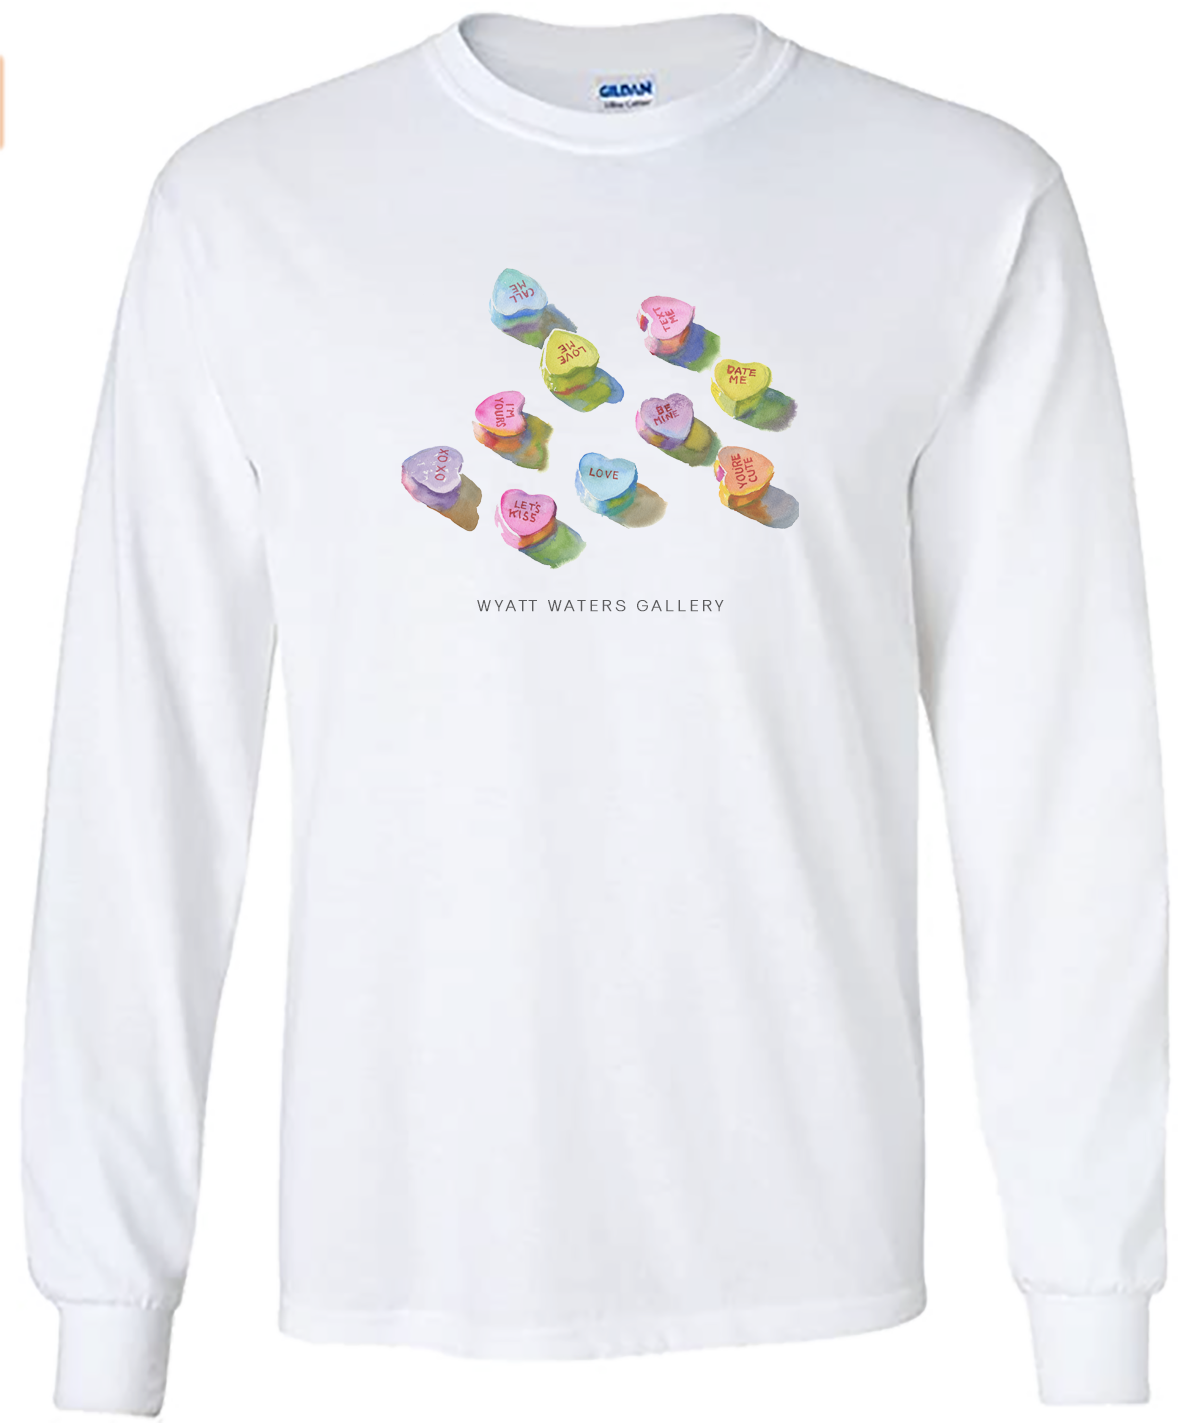 Shirt | Candy Hearts